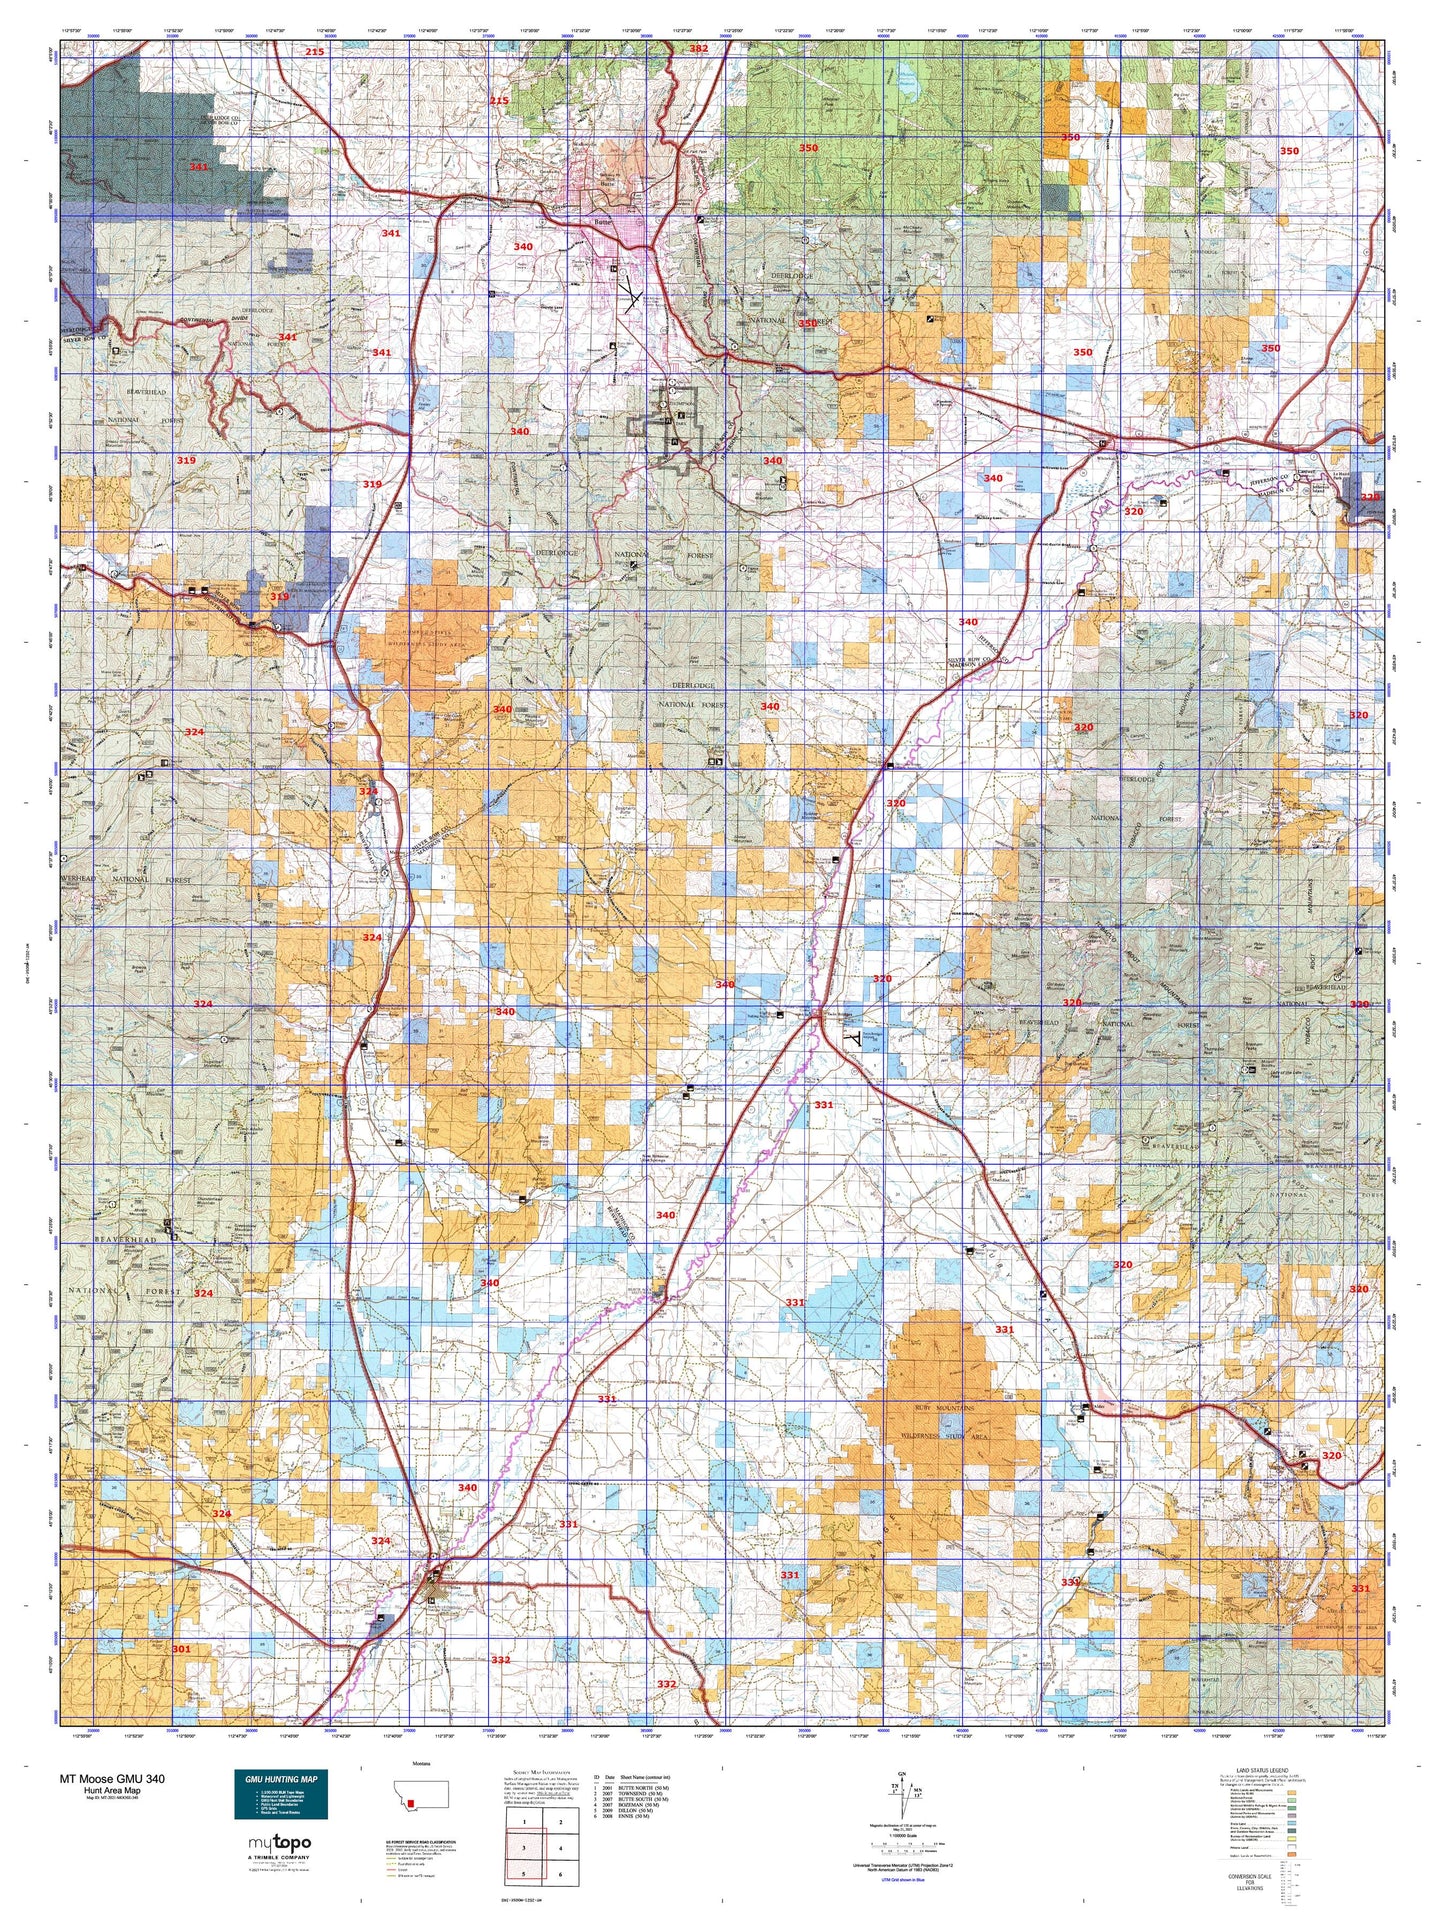 Montana Moose GMU 340 Map Image